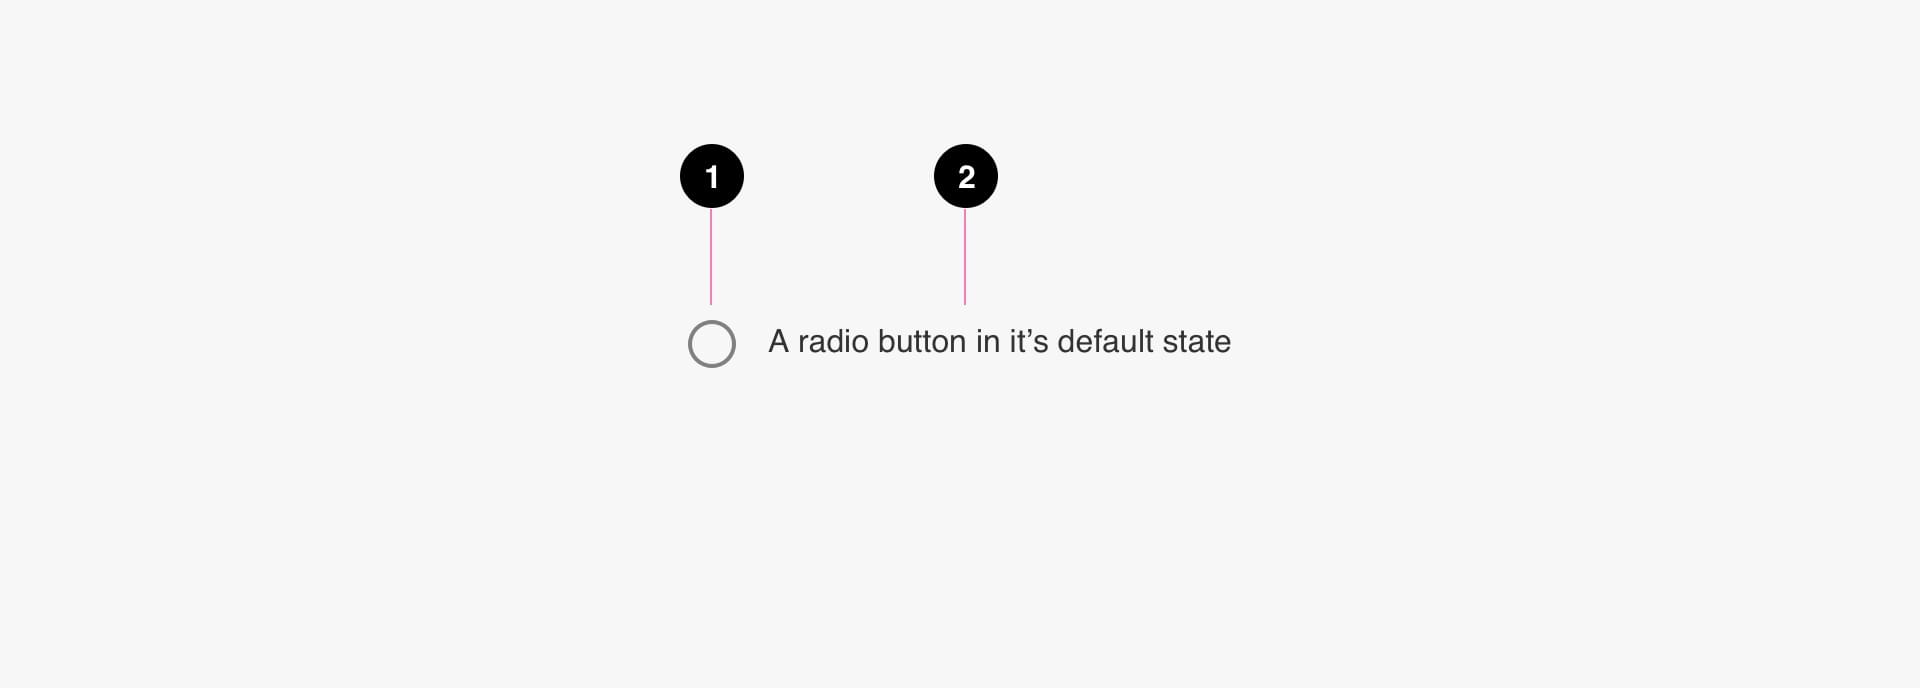 Radio Buttons Anatomy Image